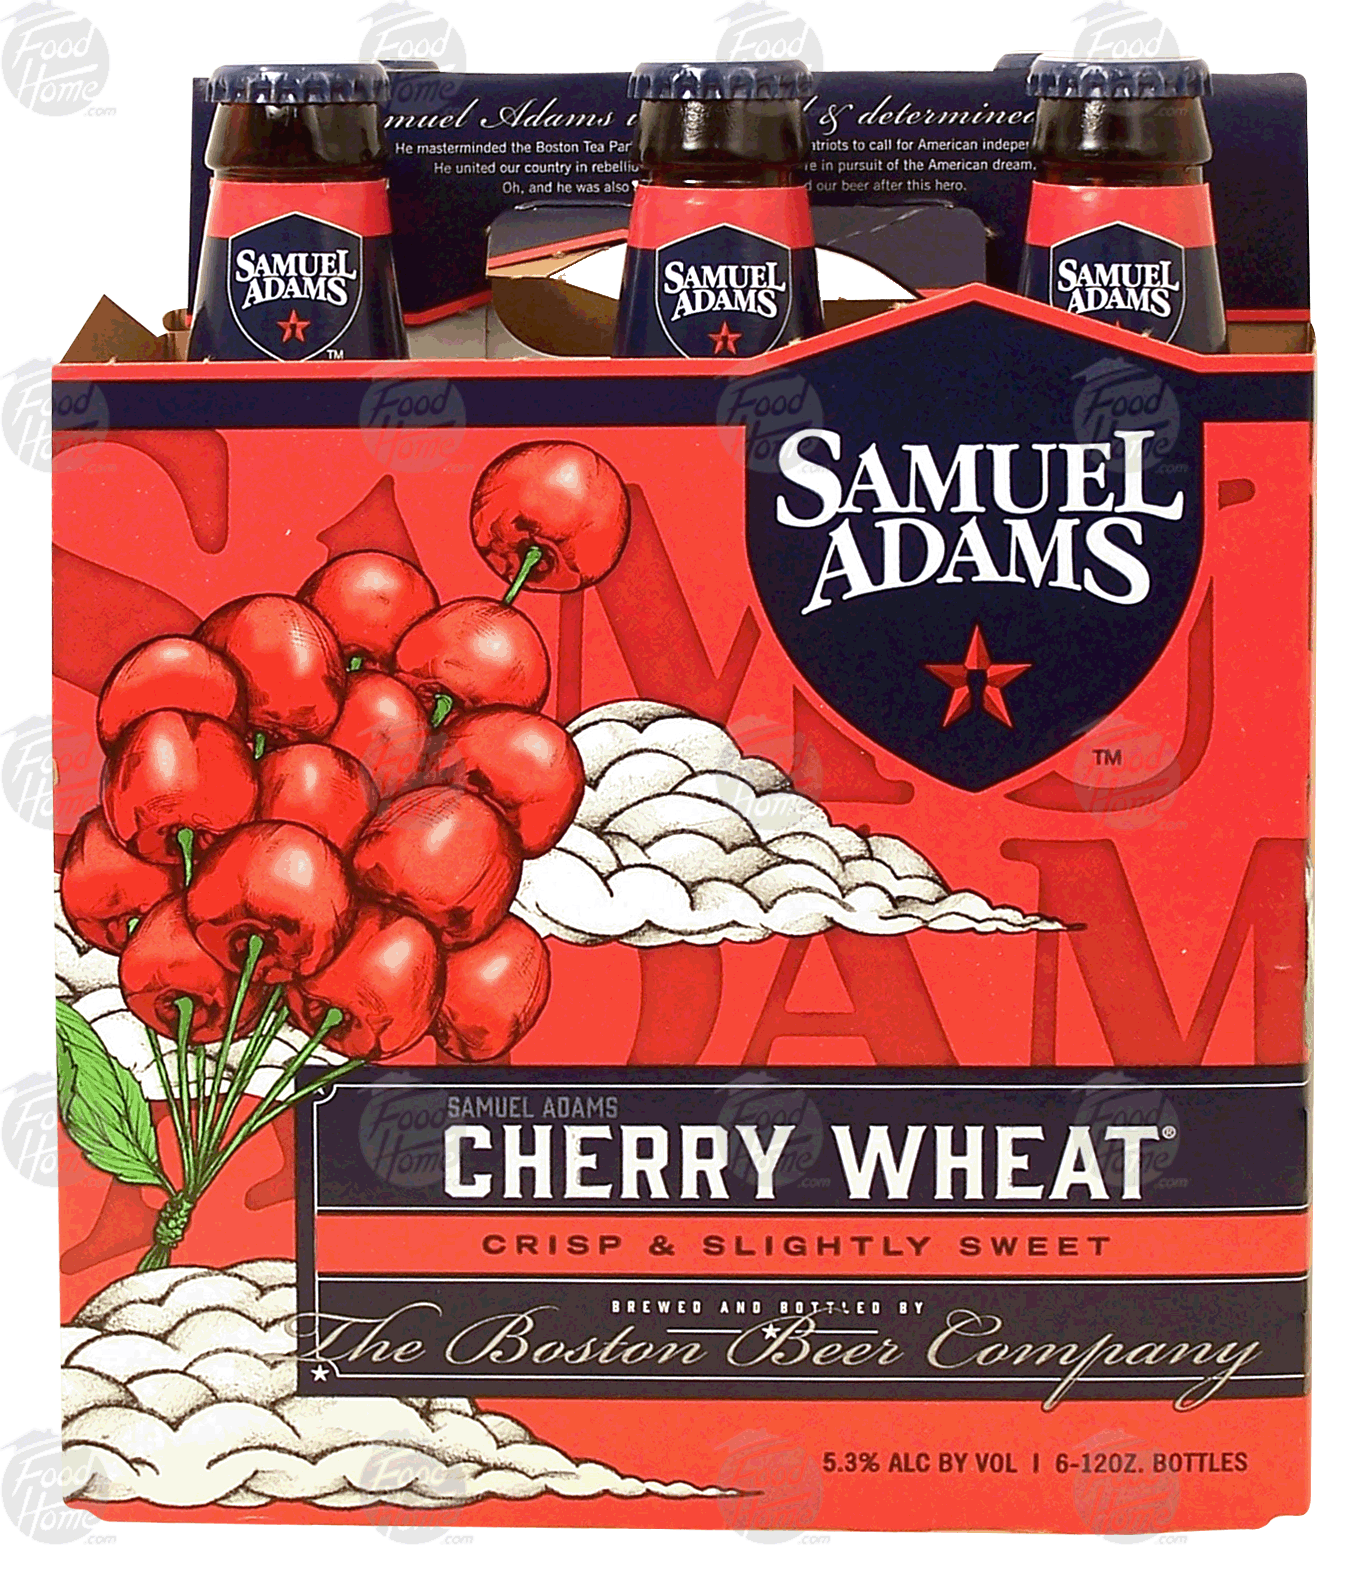 Sam Adams Cherry Wheat crisp & slightly sweet beer, 12-fl. oz., 5.3% alc. by vol. Full-Size Picture